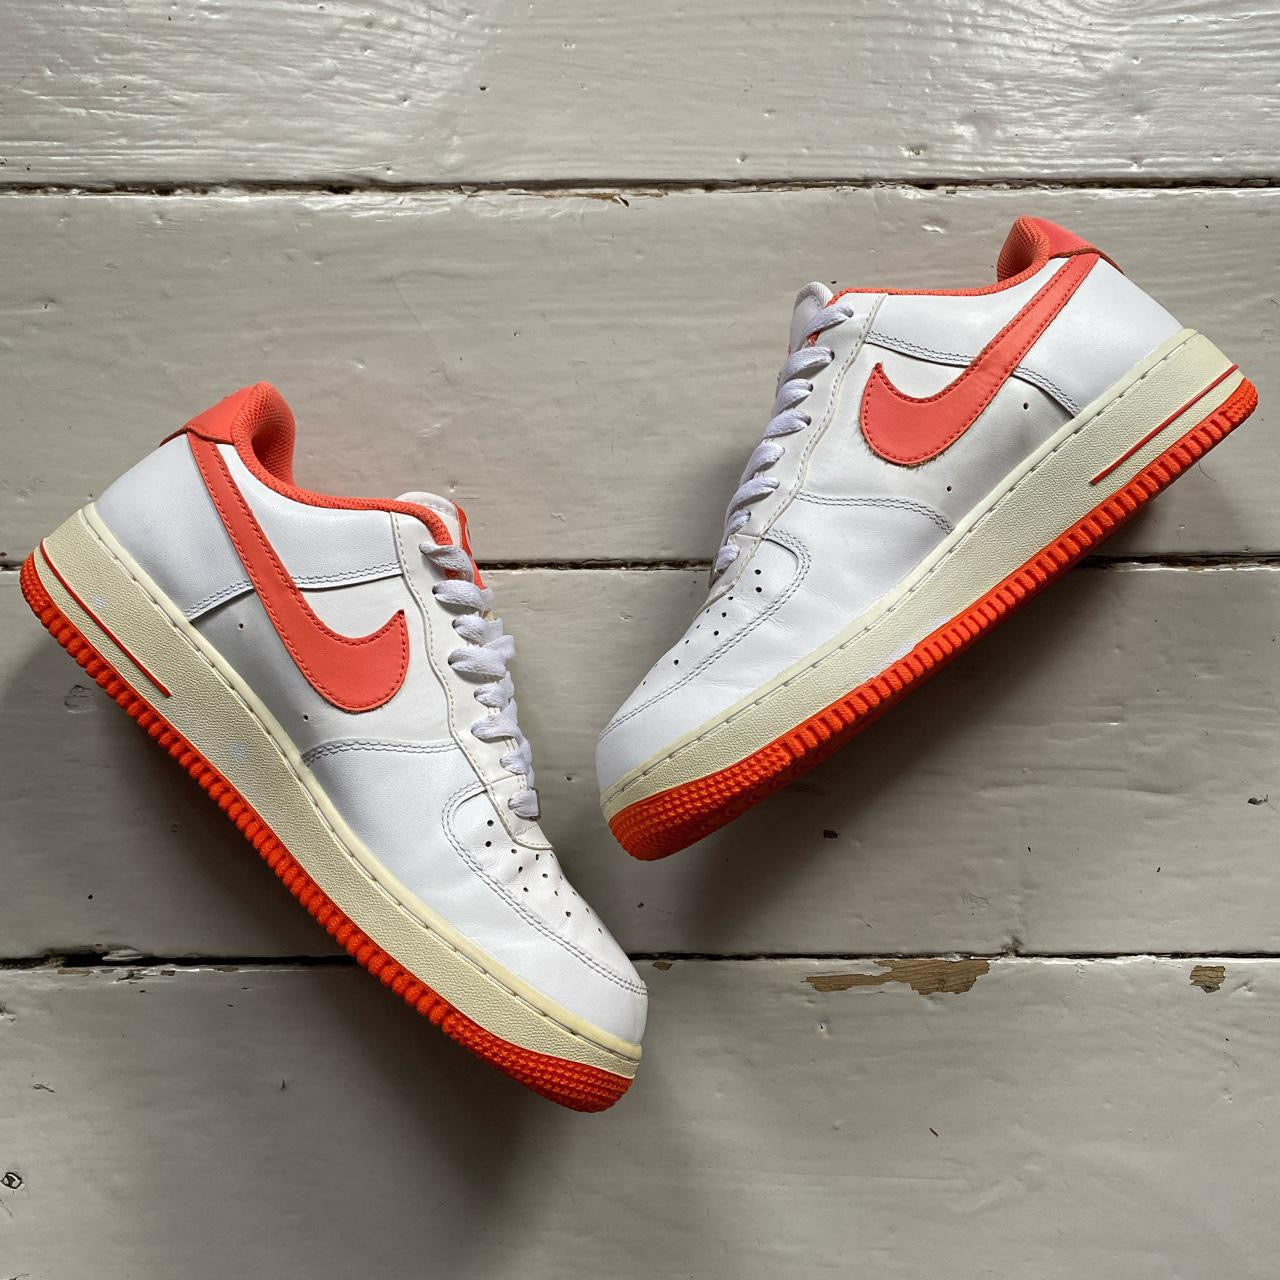 Nike Air Force 1 Total Orange and White 2012 (UK 7.5)